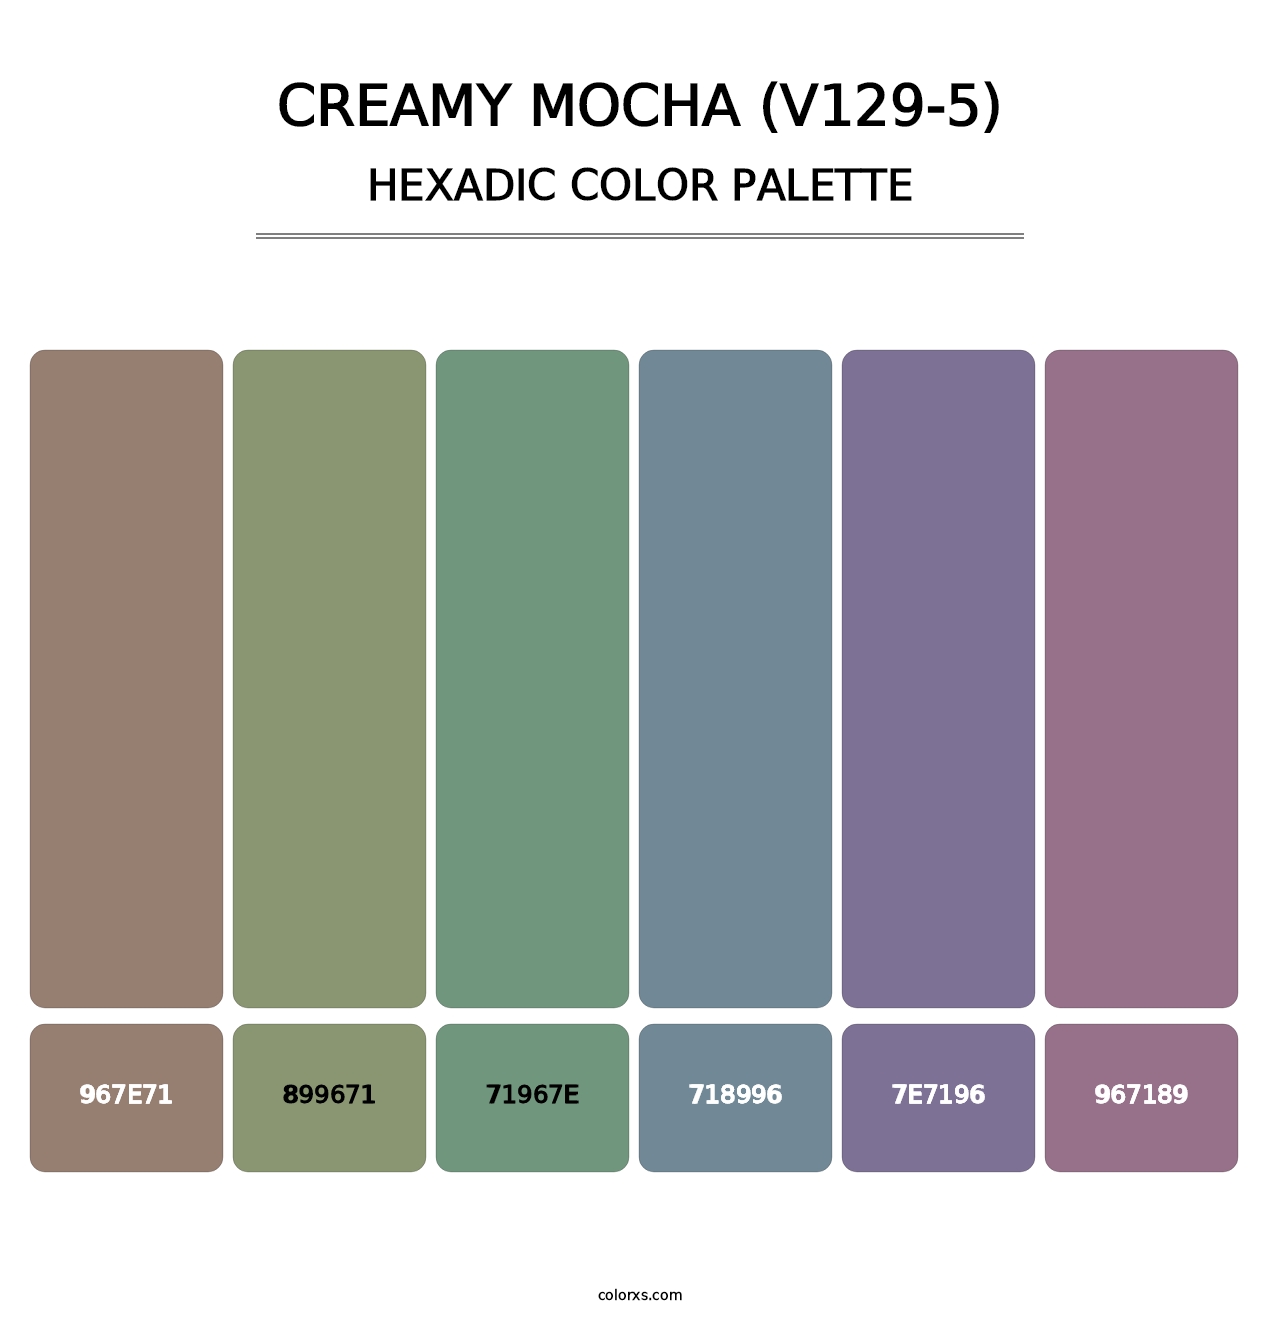 Creamy Mocha (V129-5) - Hexadic Color Palette